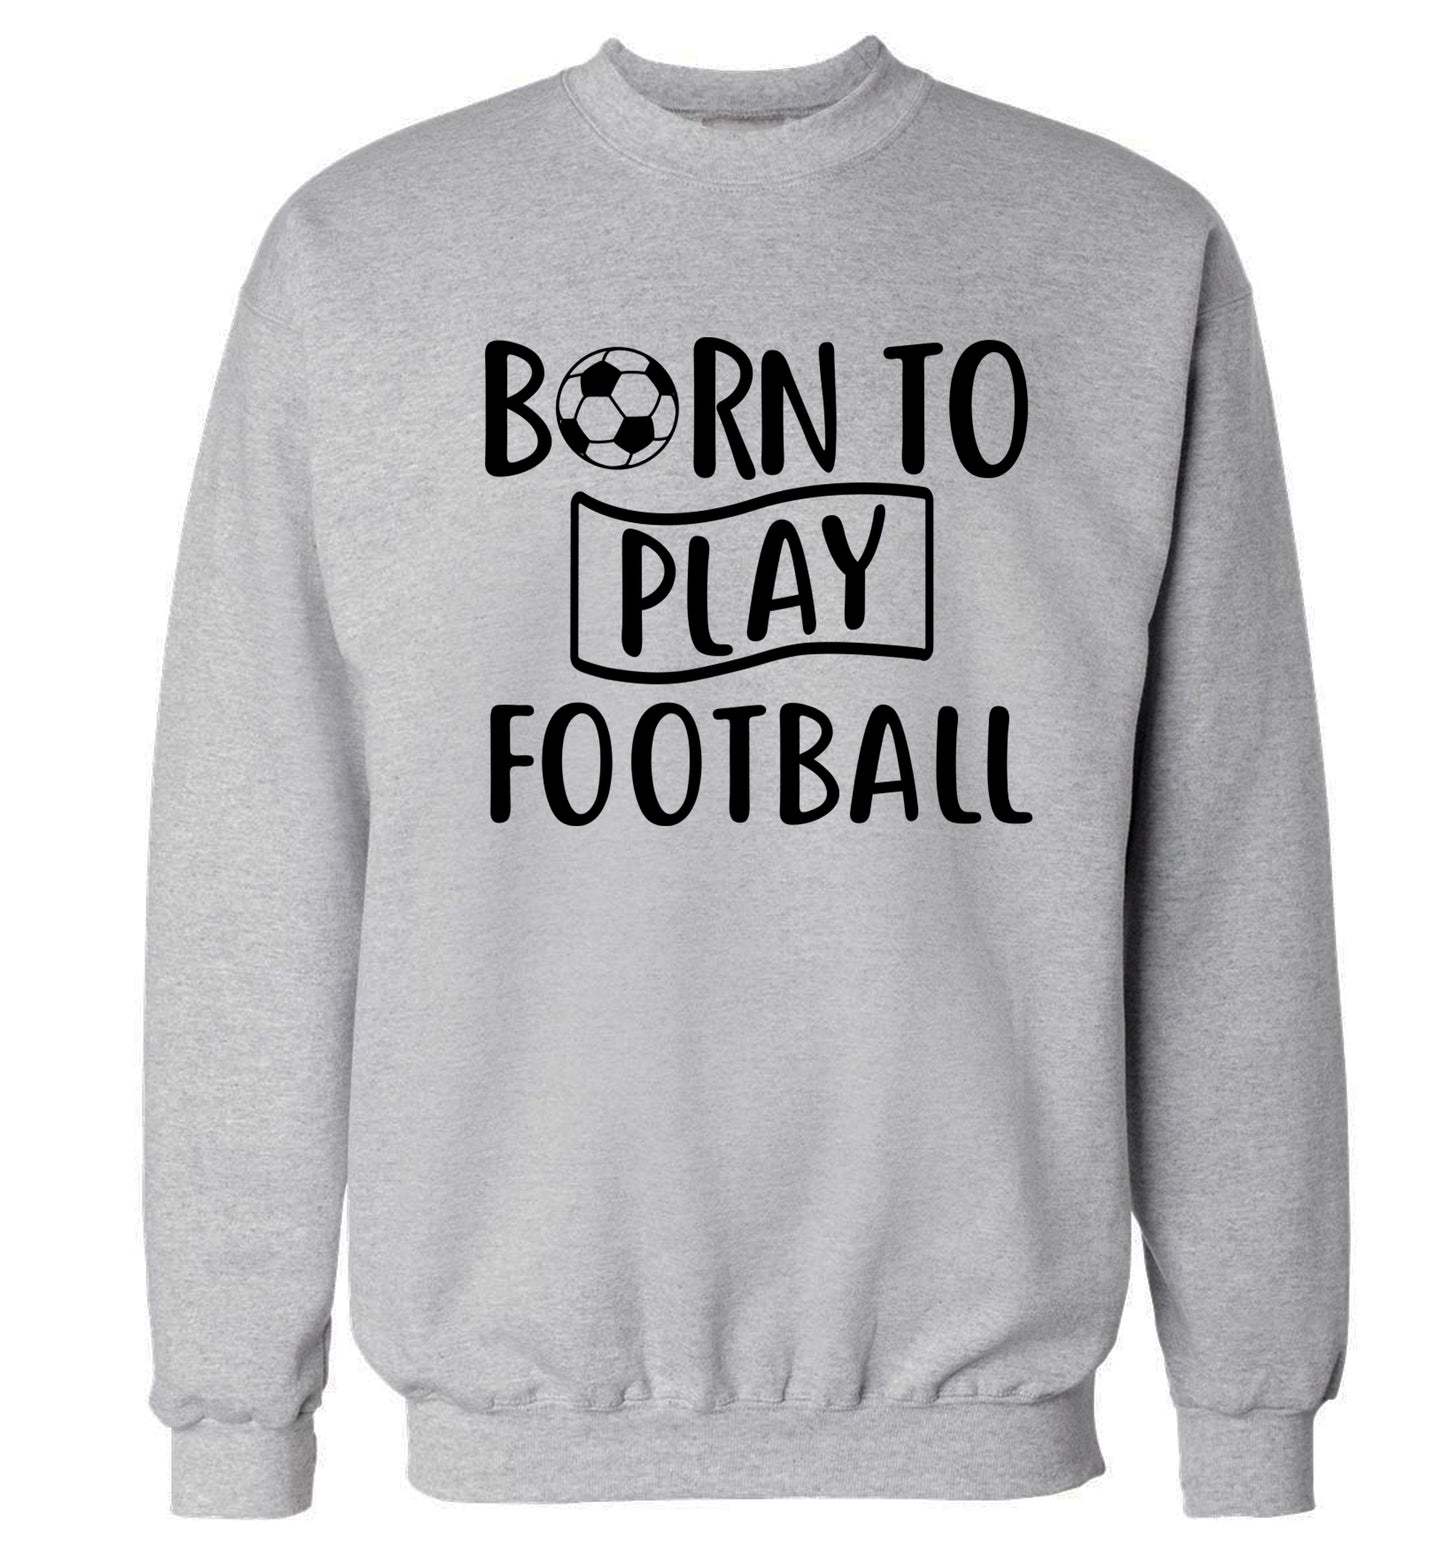 Born to play football Adult's unisexgrey Sweater 2XL